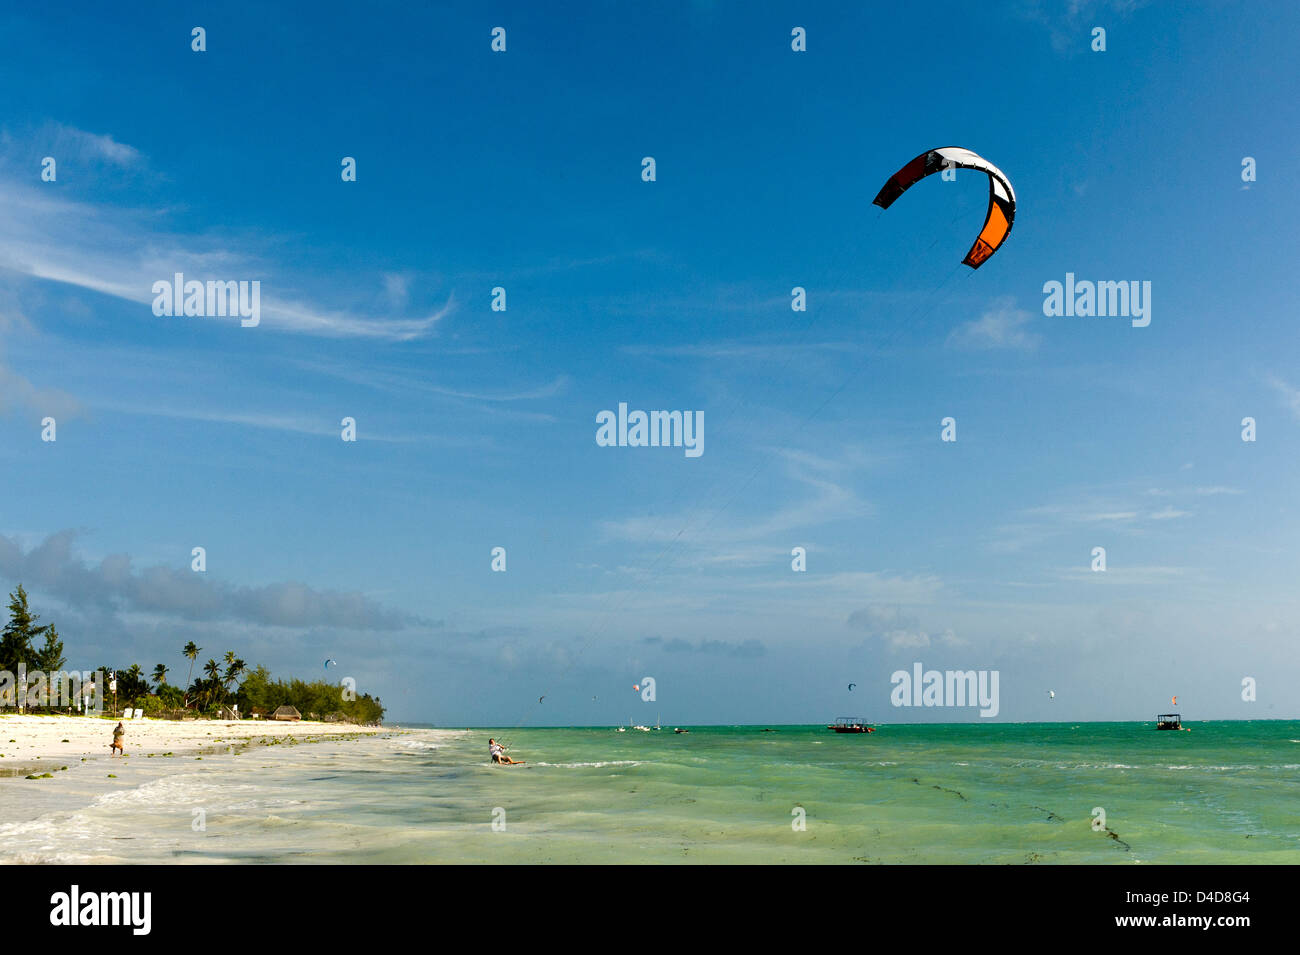 Kite surfer at beach, Paje, Zanzibar, Tanzania, Africa Stock Photo